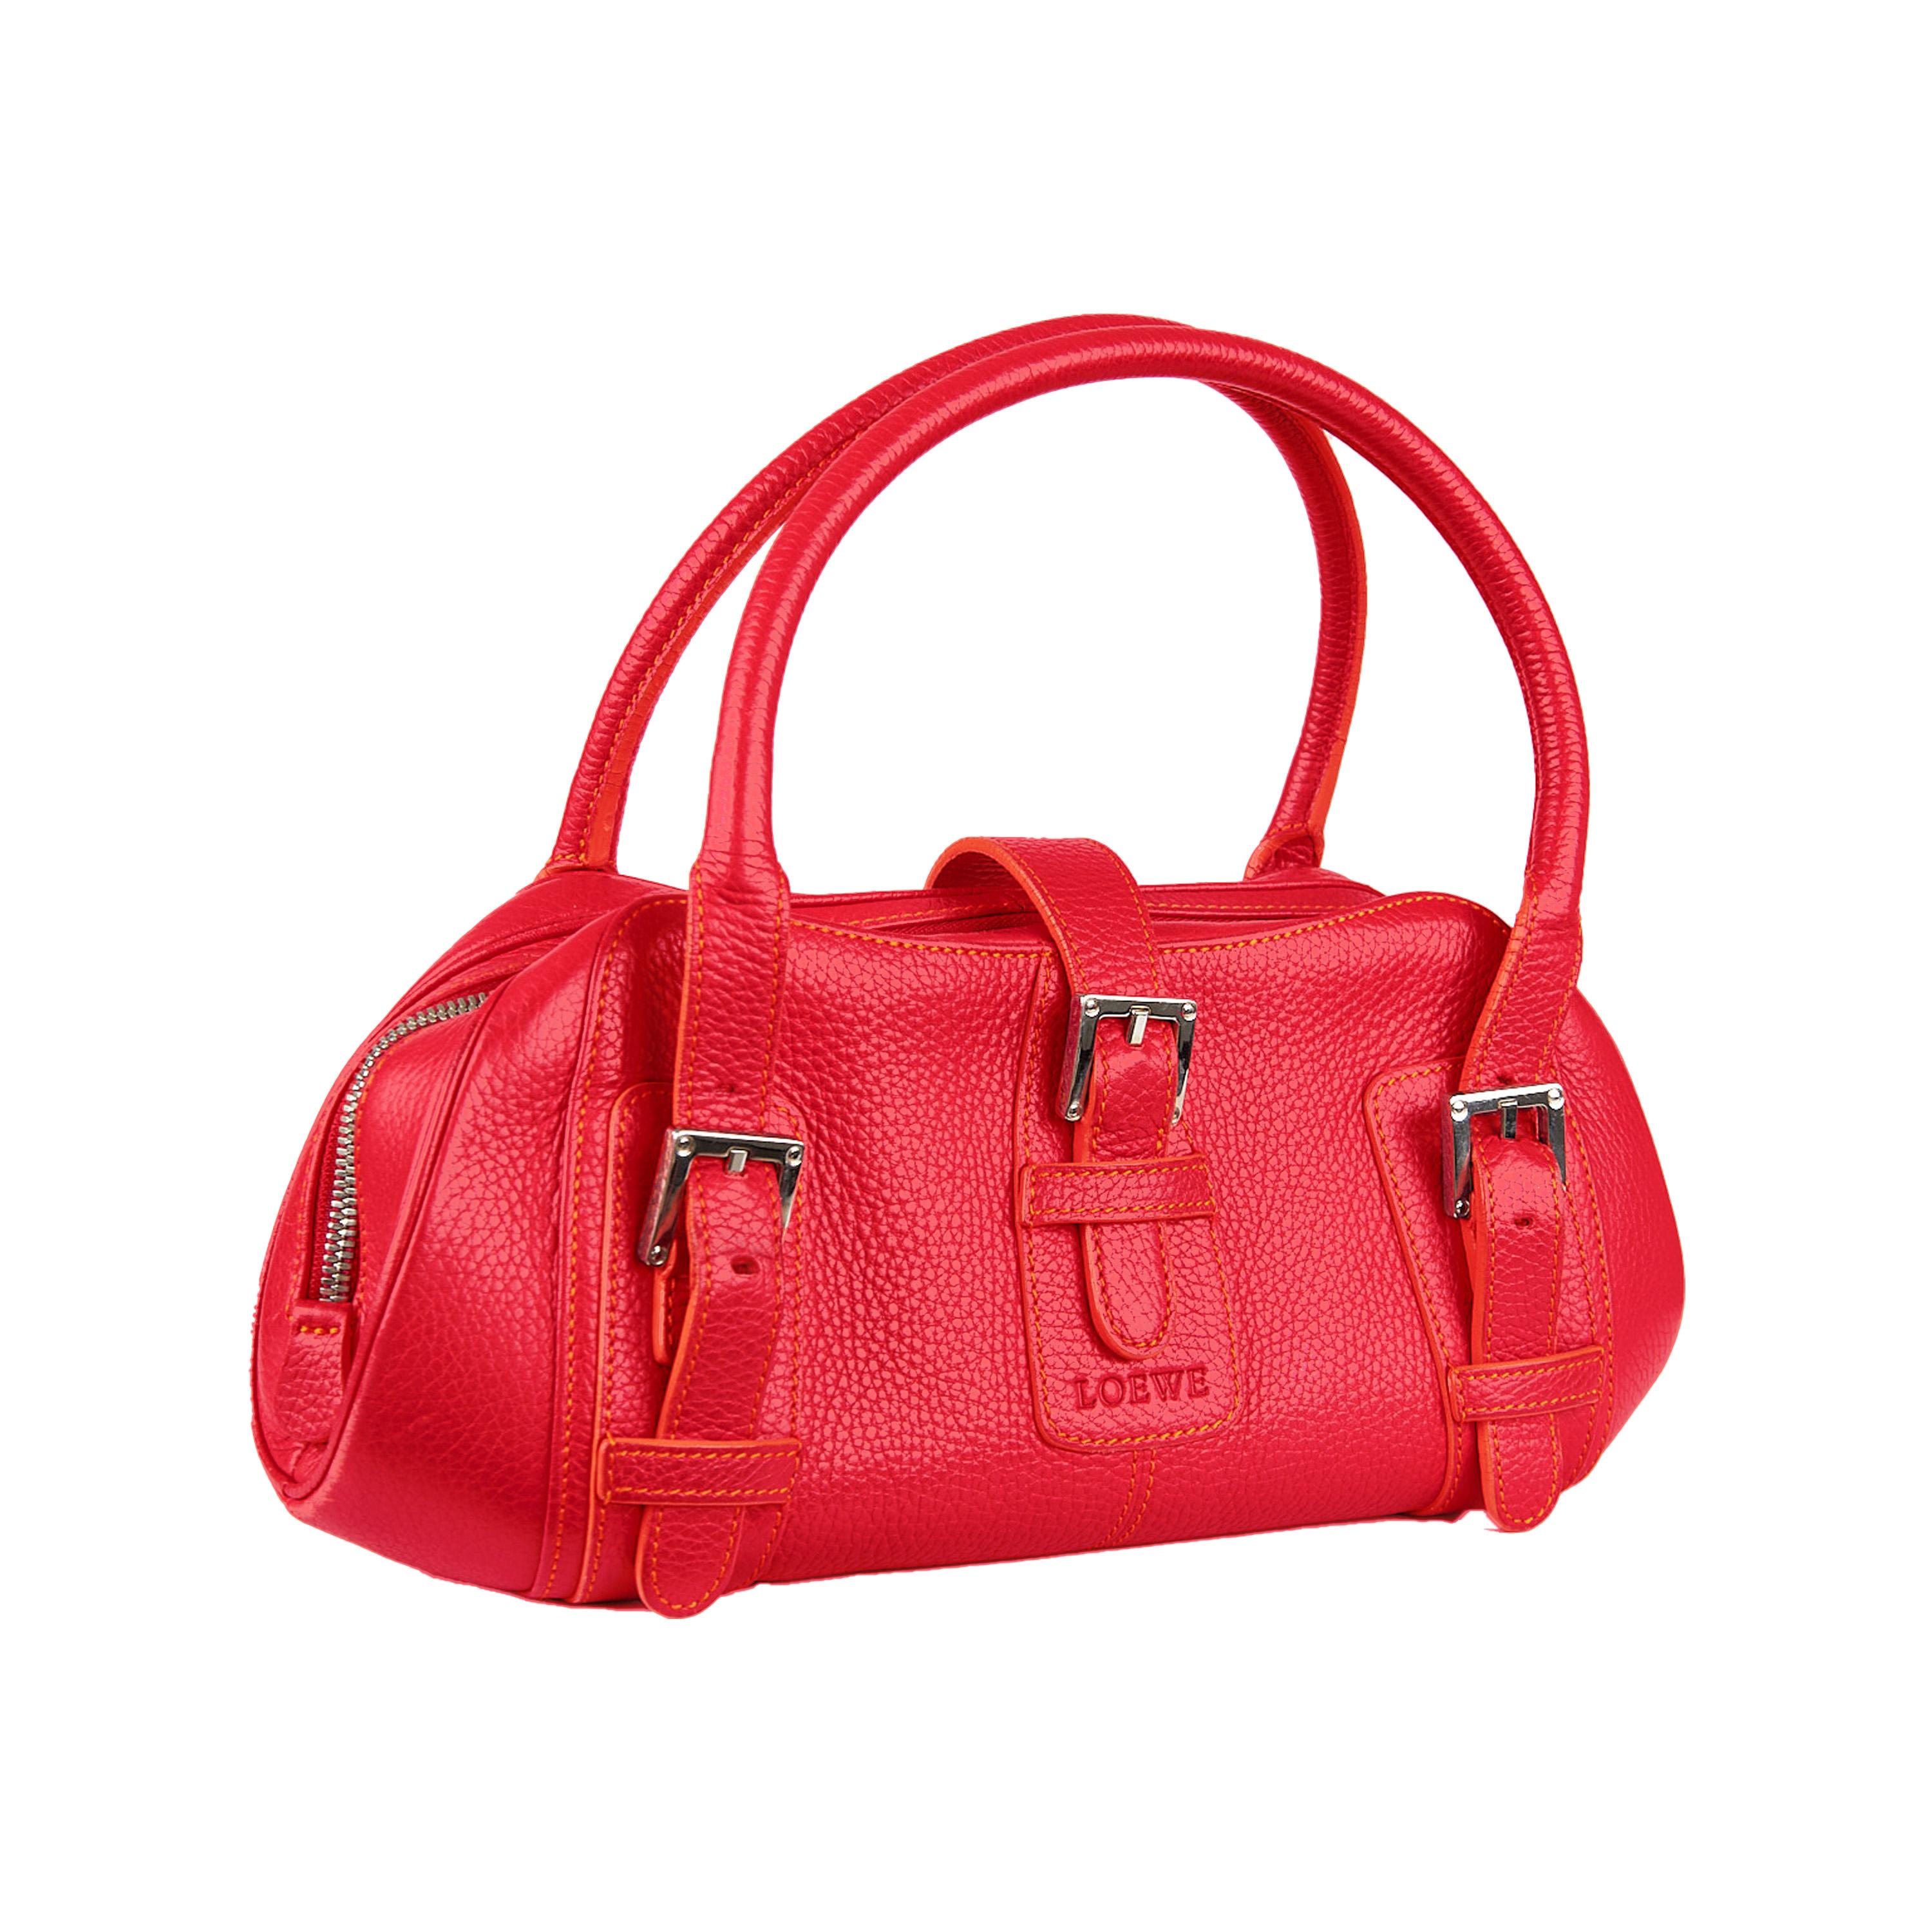 Loewe Senda Handbag In Good Condition For Sale In Milano, IT